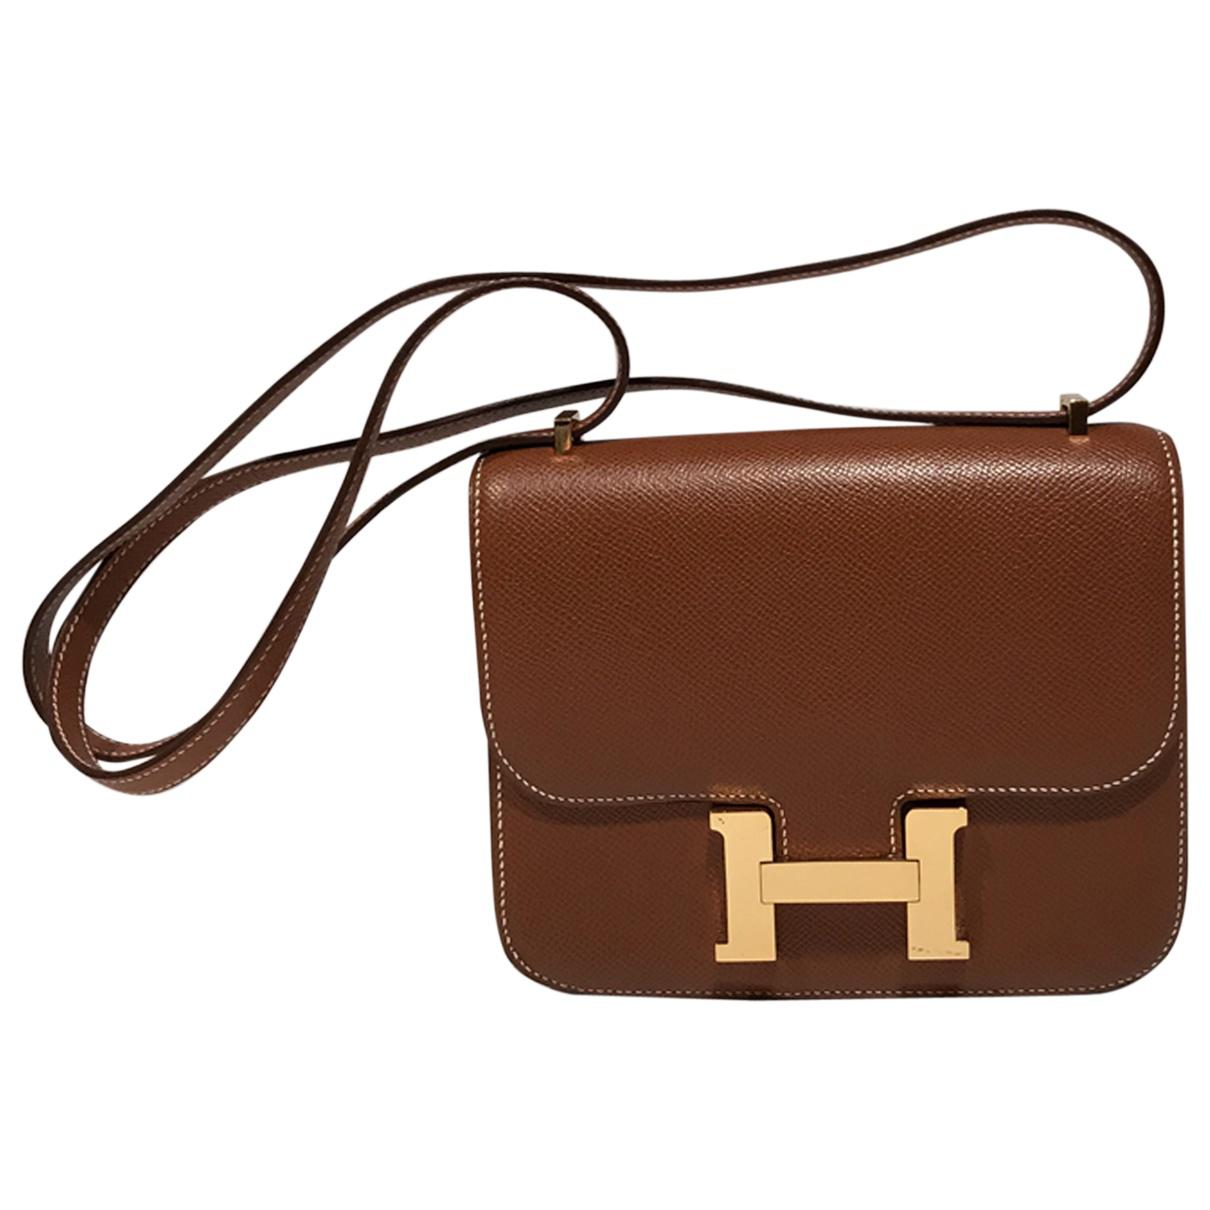 Hermès Constance Leather Crossbody Bag in Gold (Metallic) - Lyst